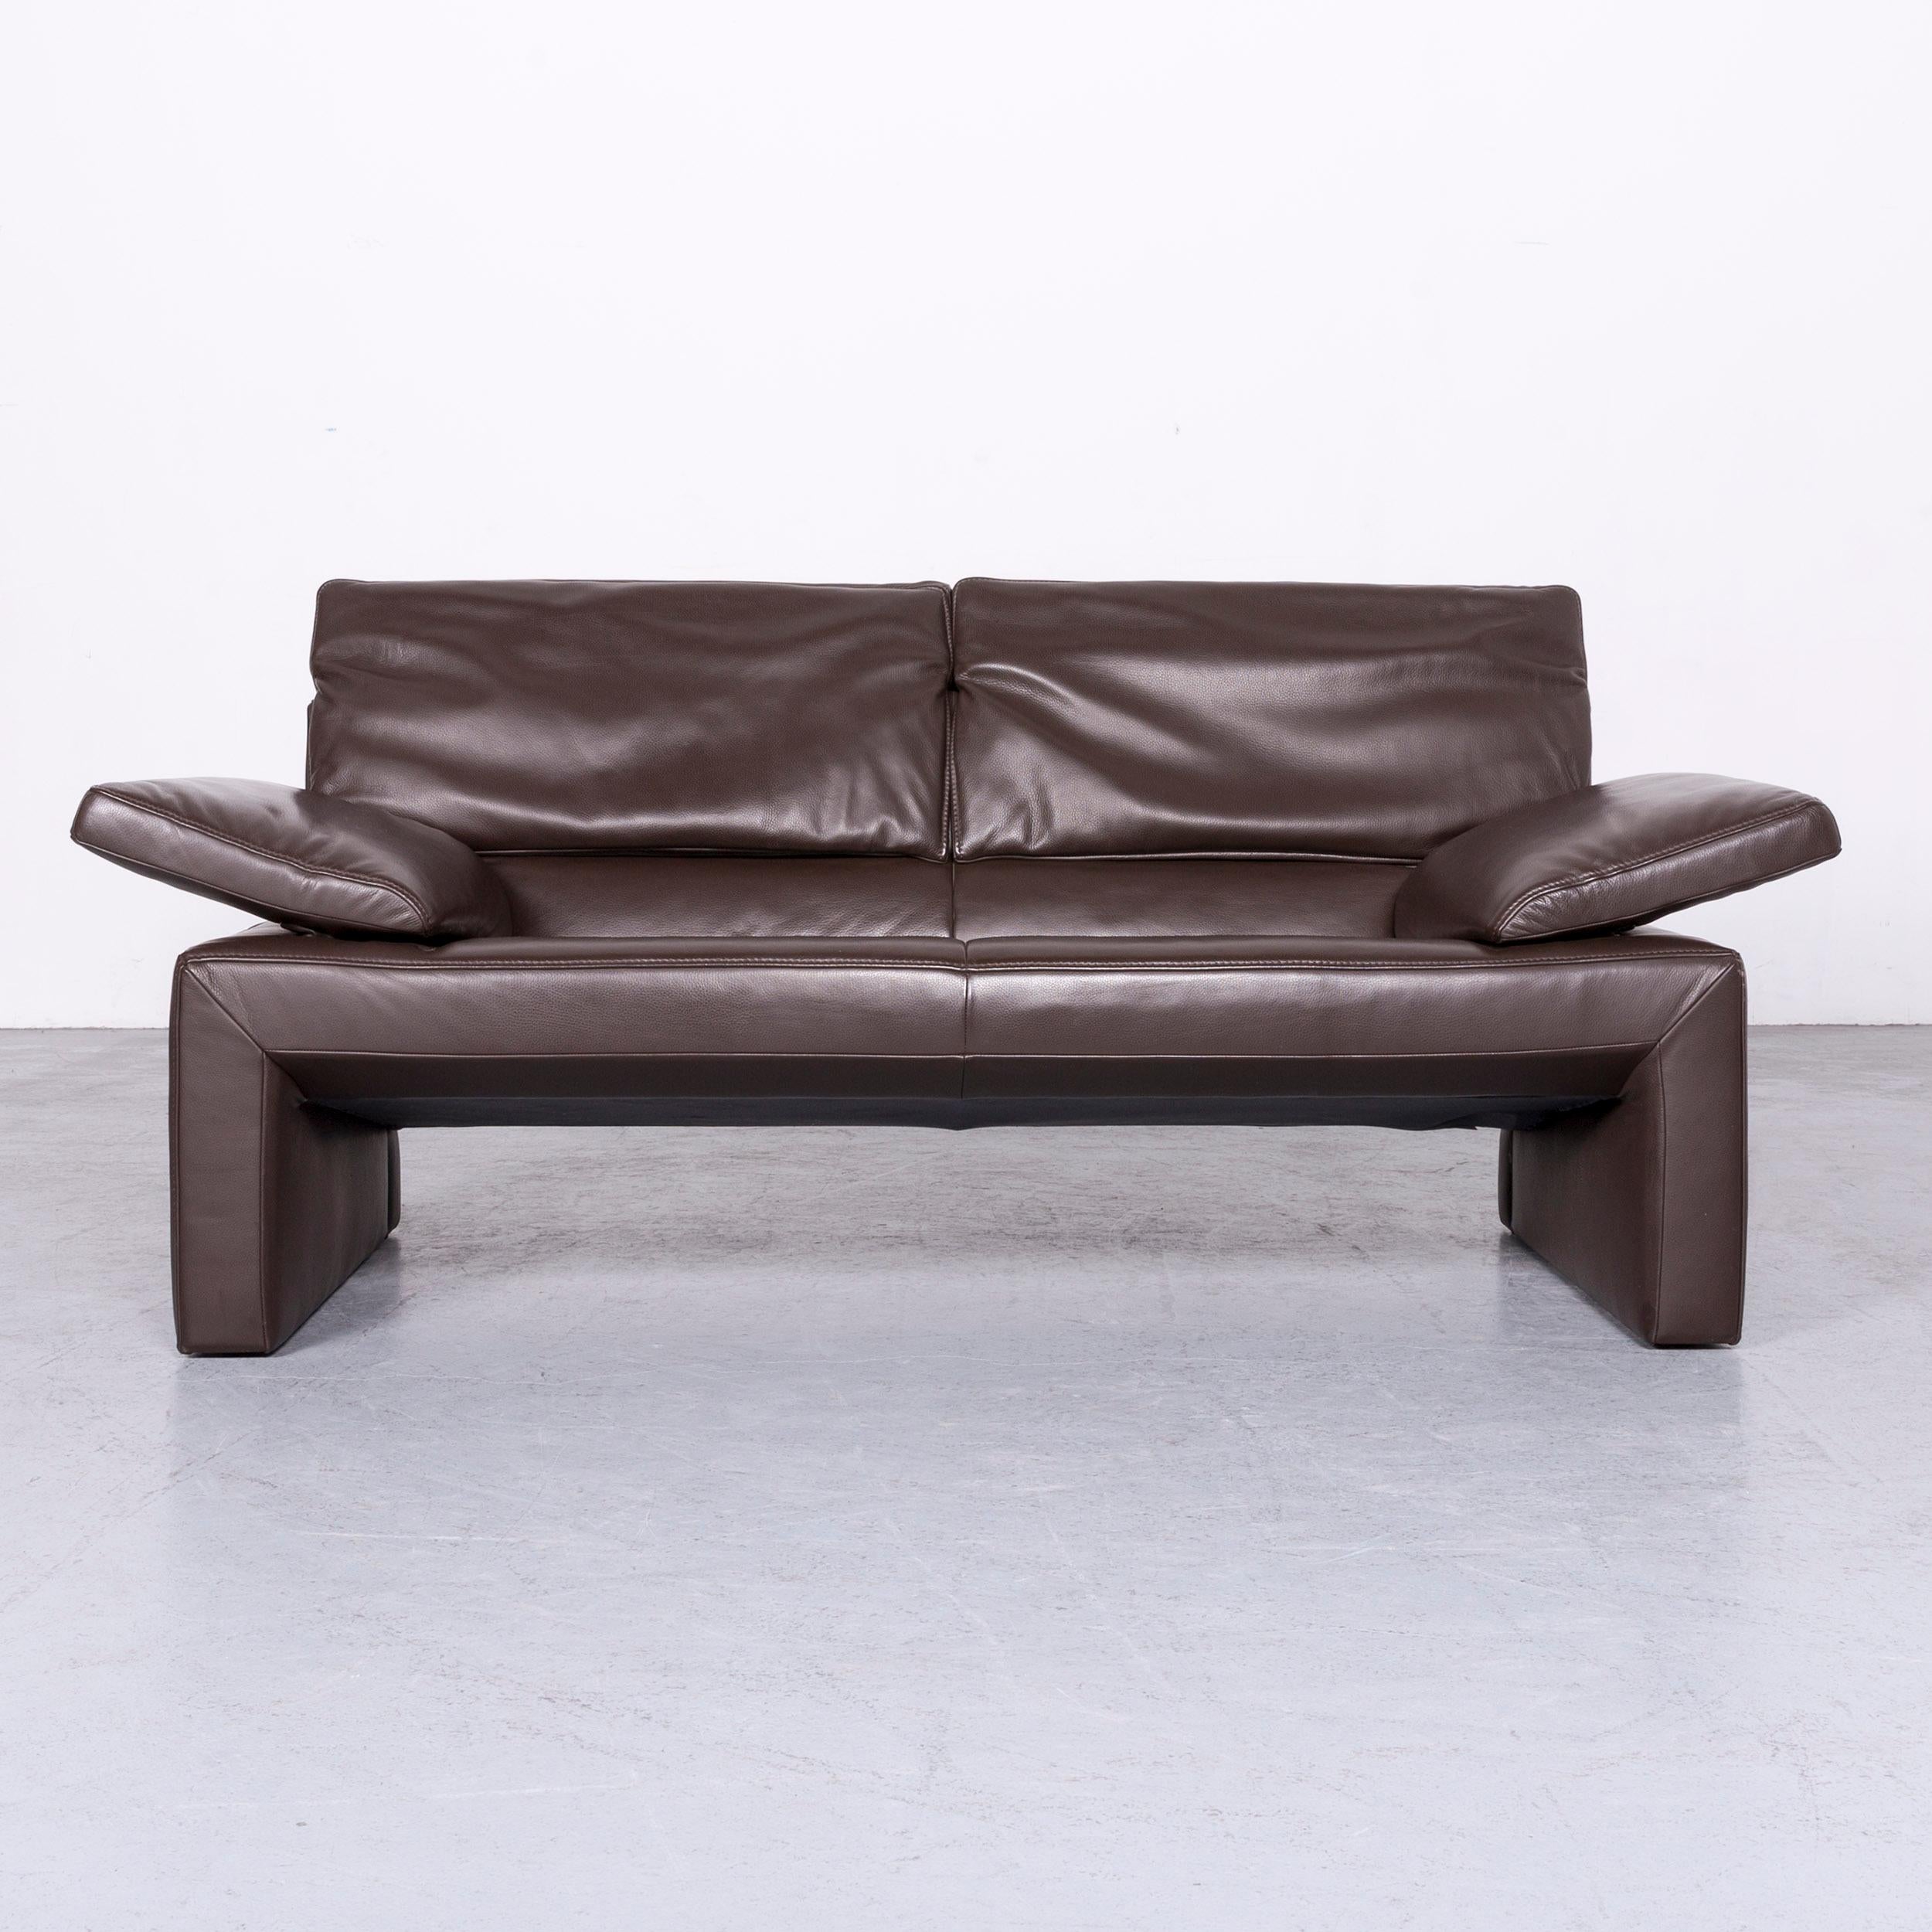 Jori Espalda Designer Leather Sofa Brown Two-Seat Couch In Good Condition For Sale In Cologne, DE